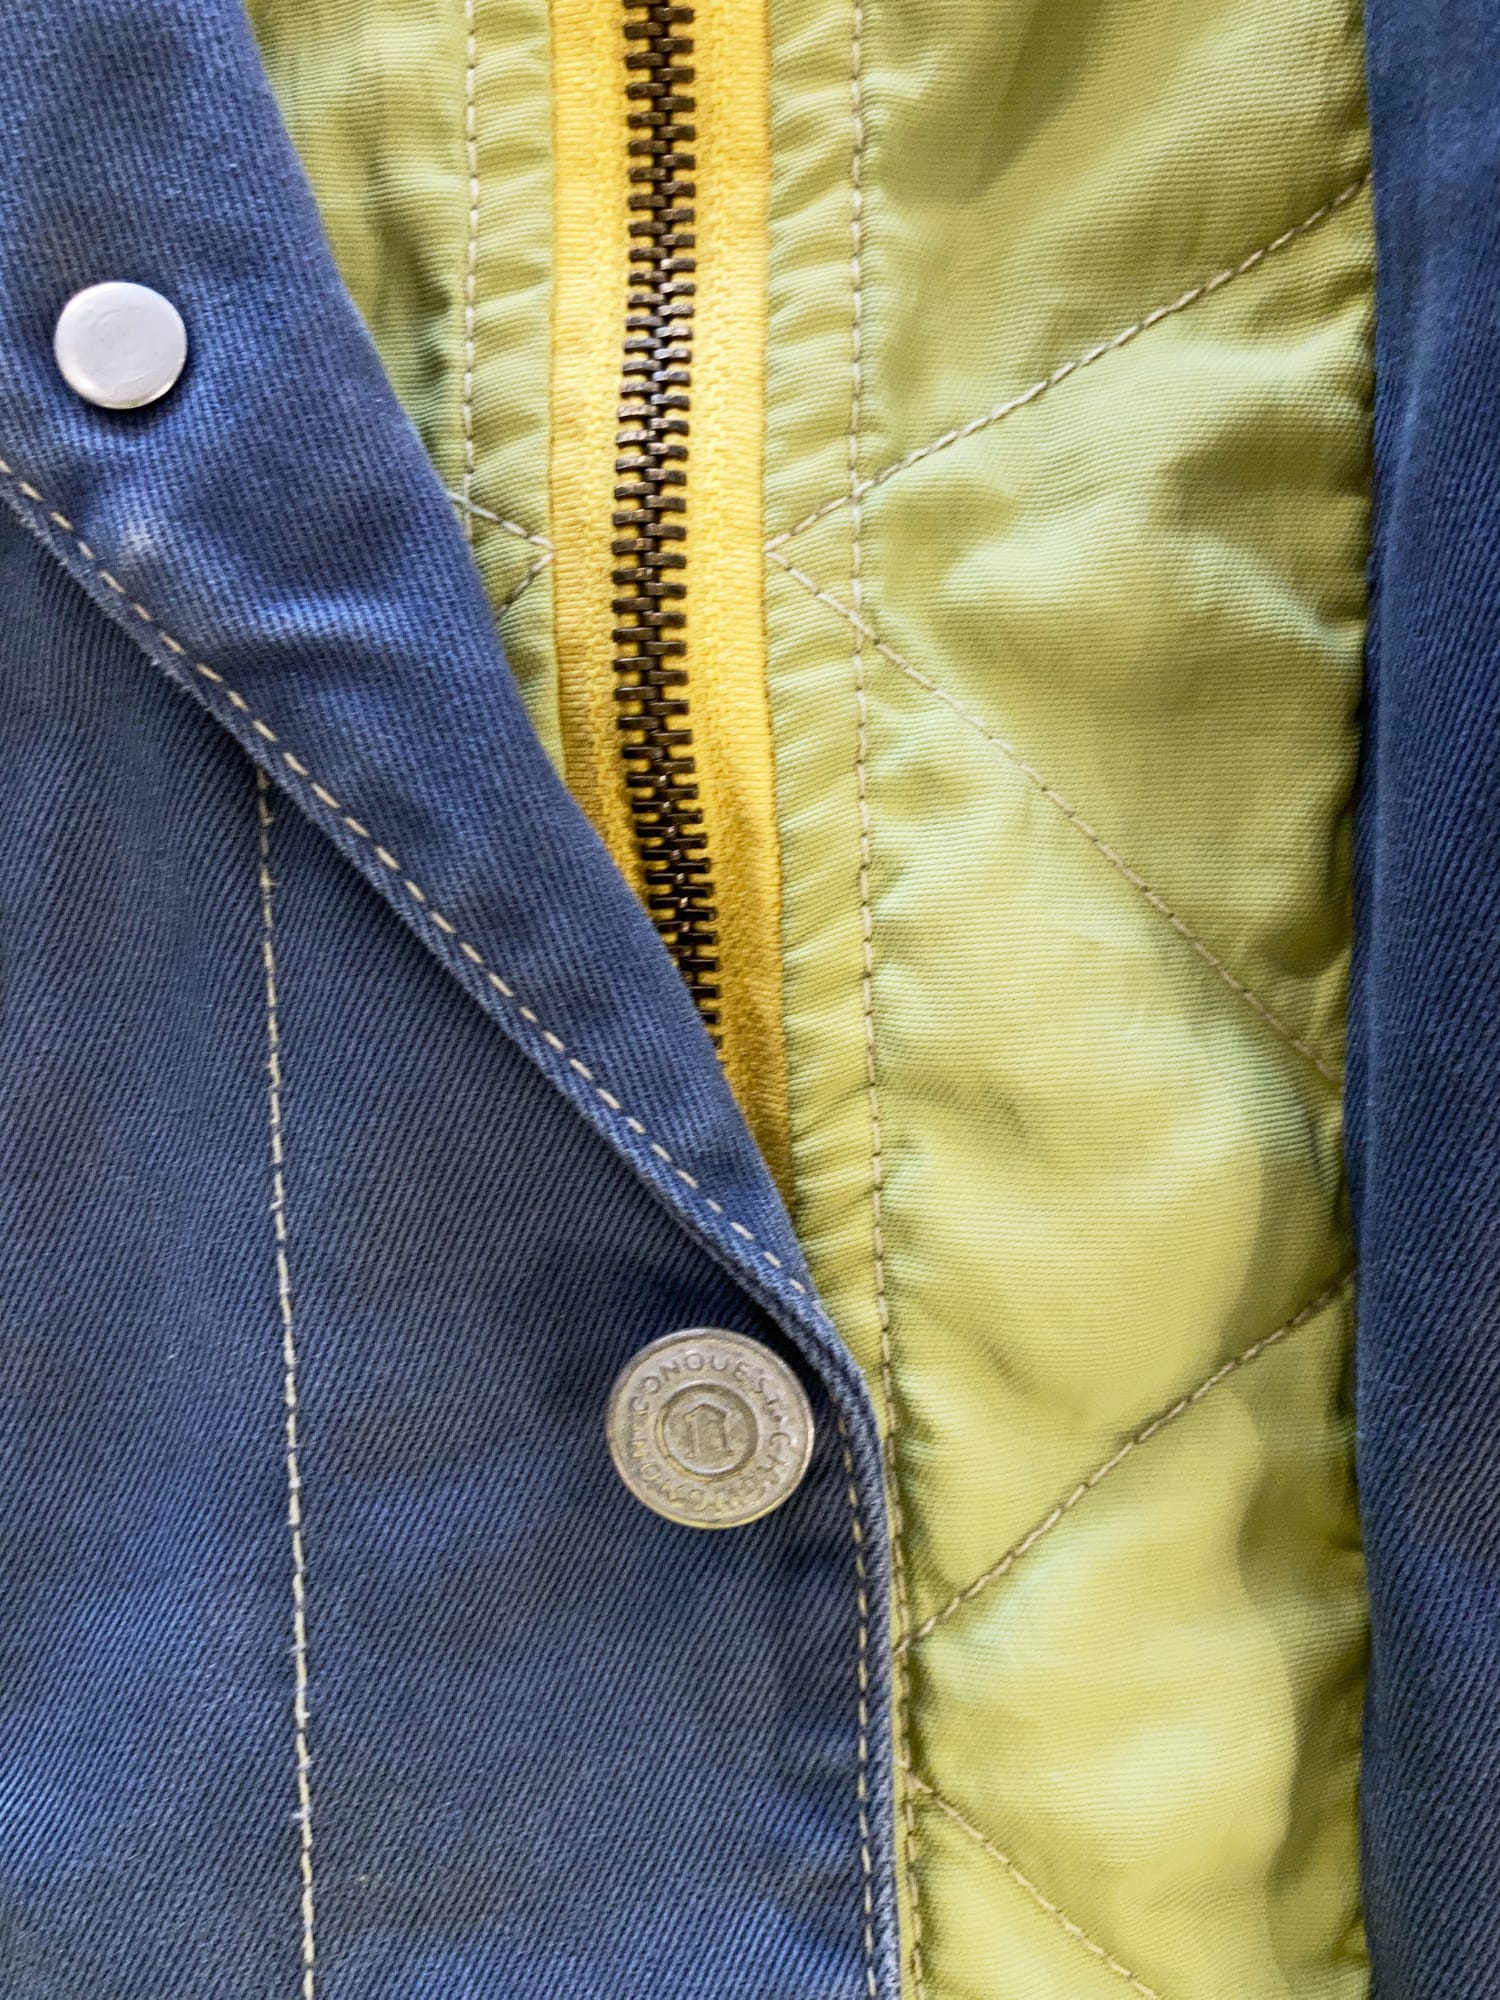 Chevignon Denim 1990s smoky blue denim trucker jacket with integrated vest - M